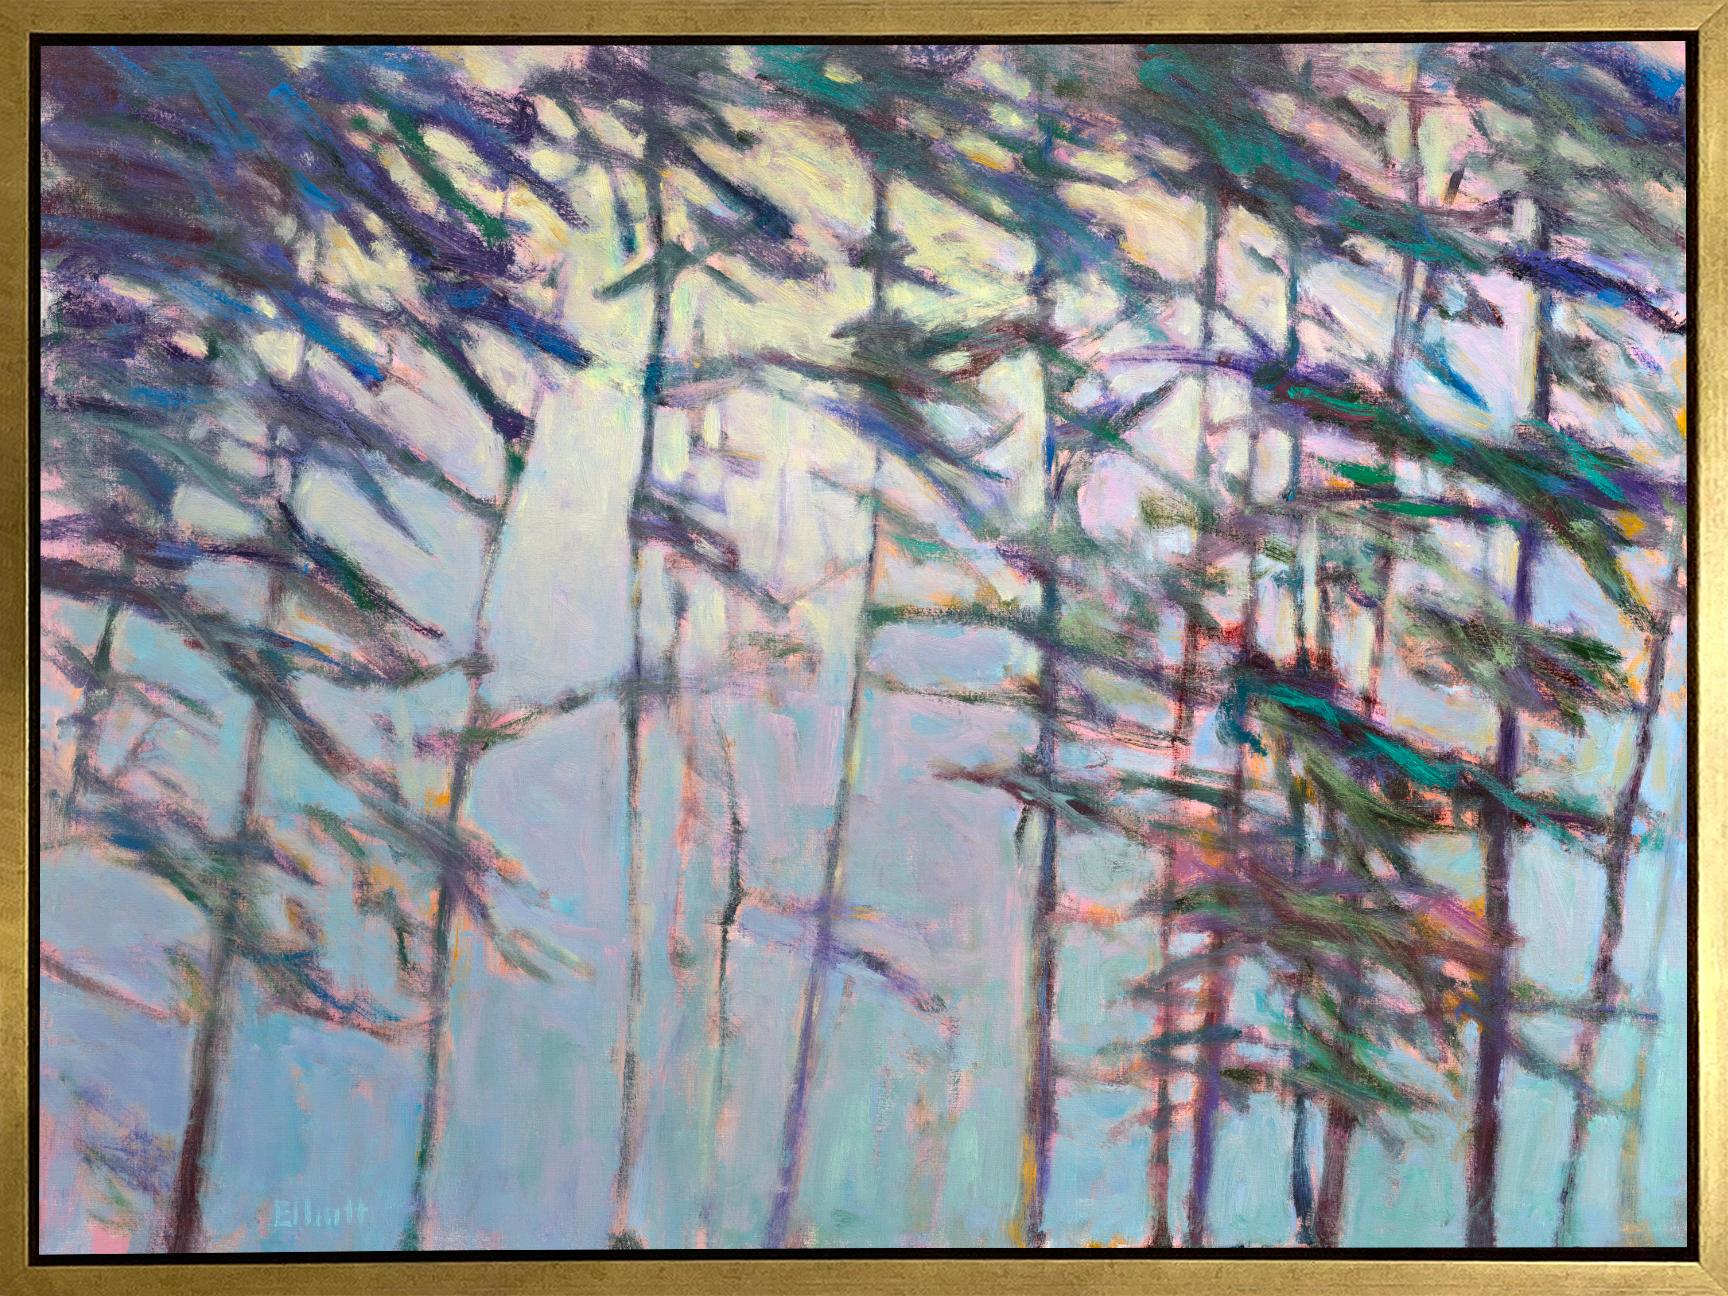 Ken Elliott Landscape Print - "Light Emerging - Diffused Blue, " Framed Limited Edition Giclee Print, 36" x 48"